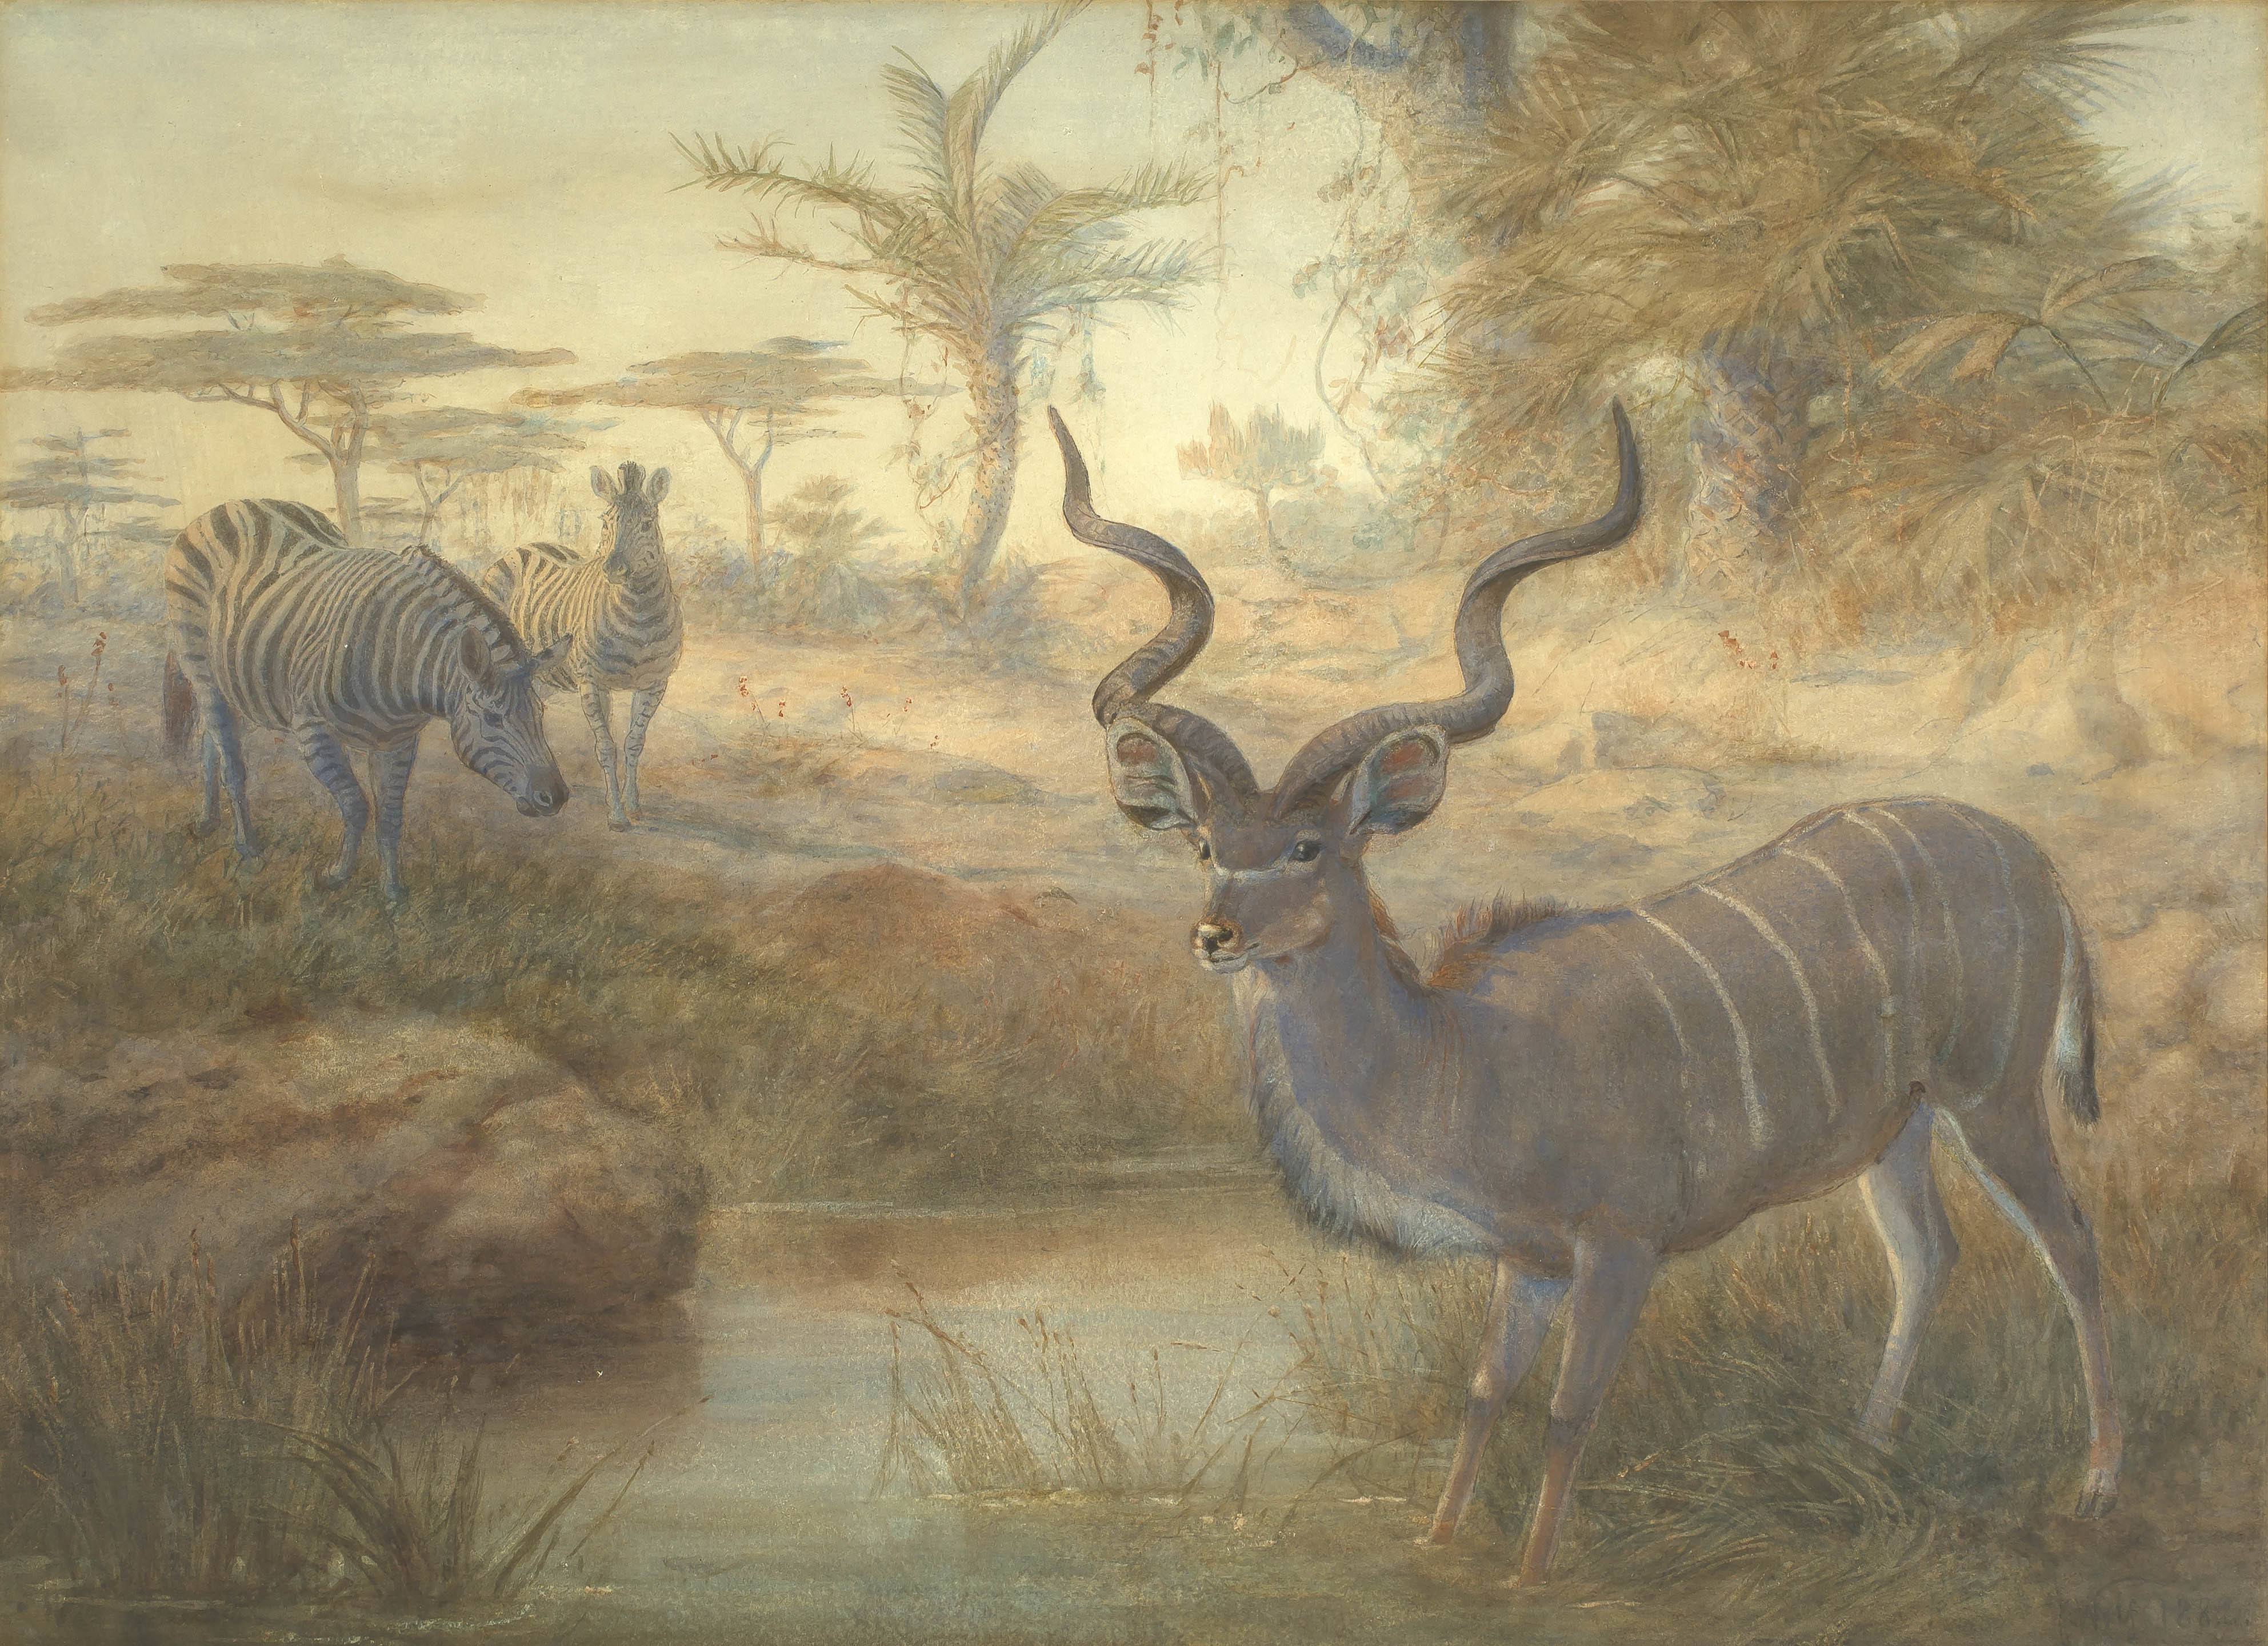 Joseph Wolf; The Greater Kudu and Zebra